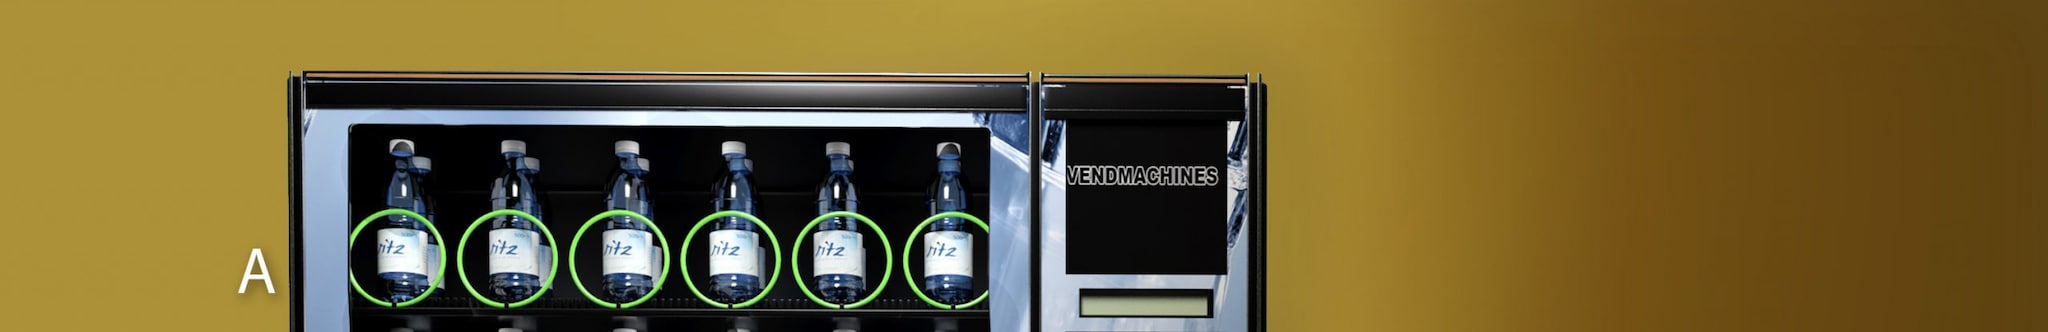 Row A - Beverage vending machine